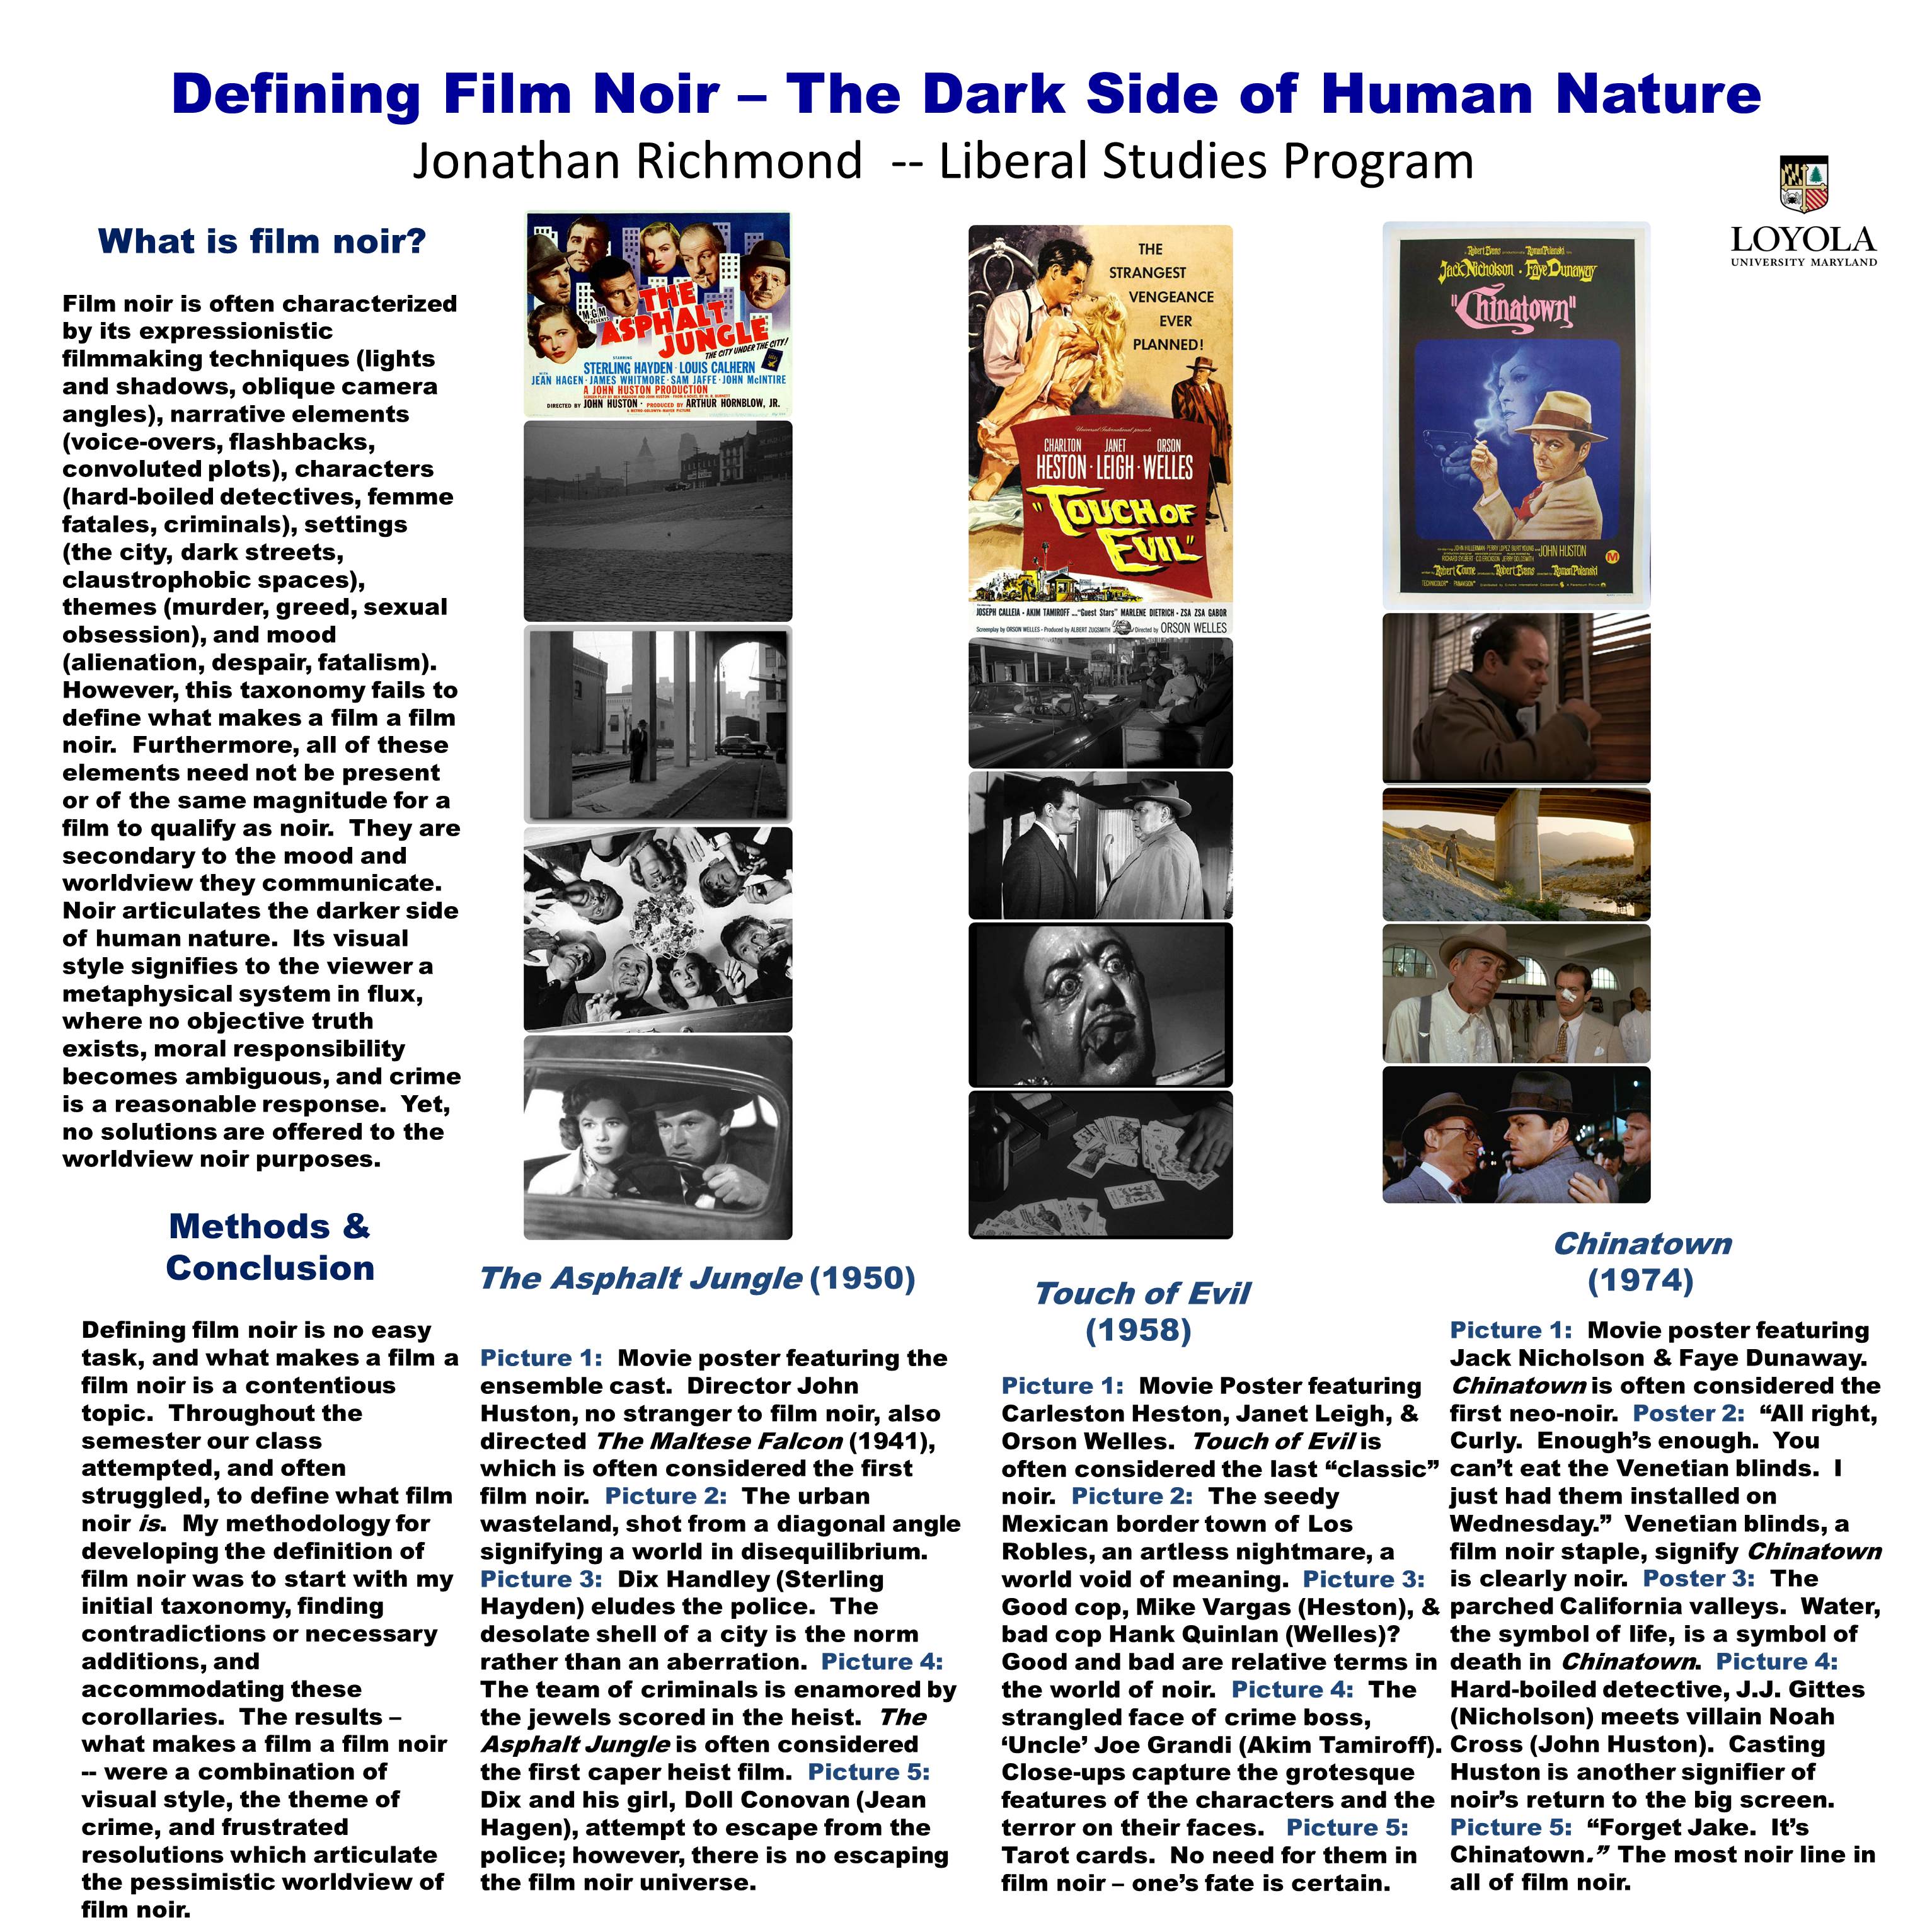 poster image: Defining Film Noir -- The Dark Side of Human Nature'